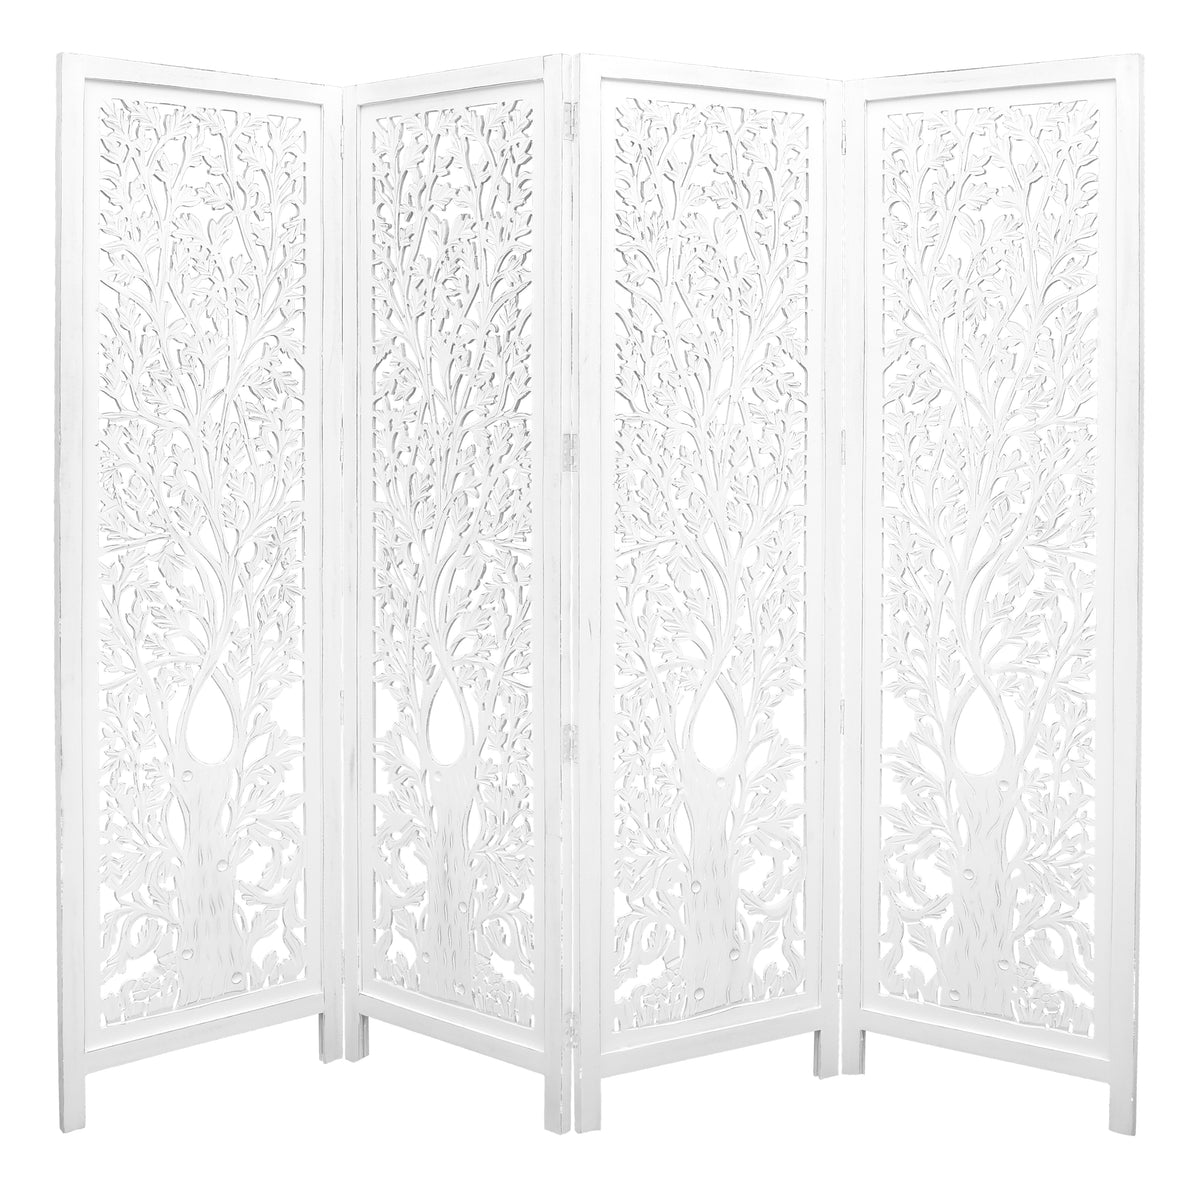 Iris 4 Panel Room Divider in Timber Wood - White - Notbrand